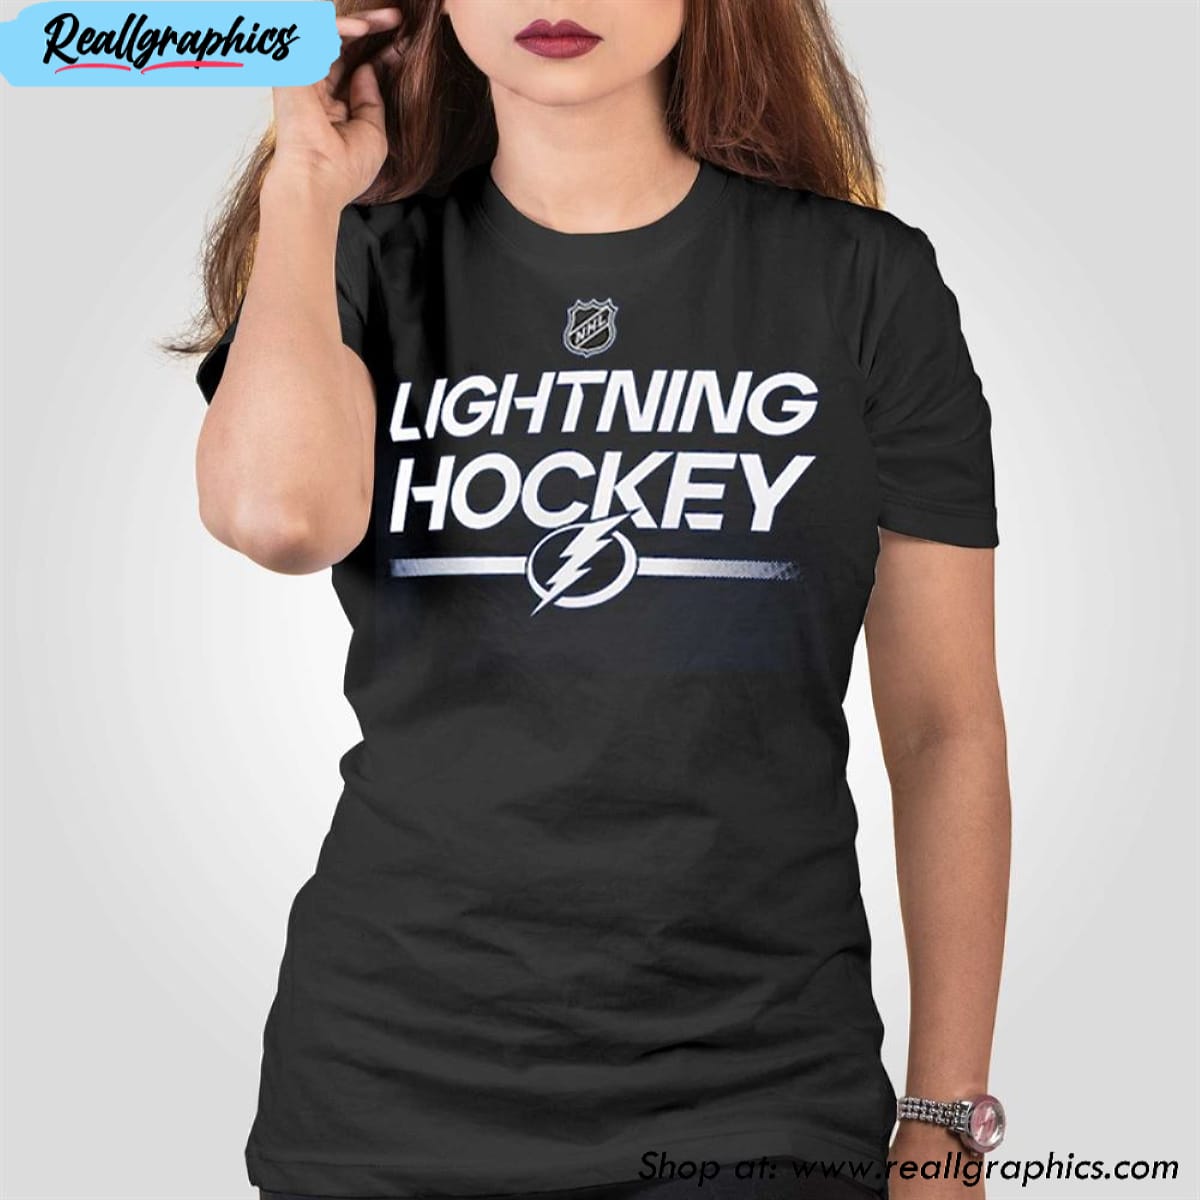 813 Tampa Buccaneers Tampa Rays And Tampa Lightning Shirt, hoodie